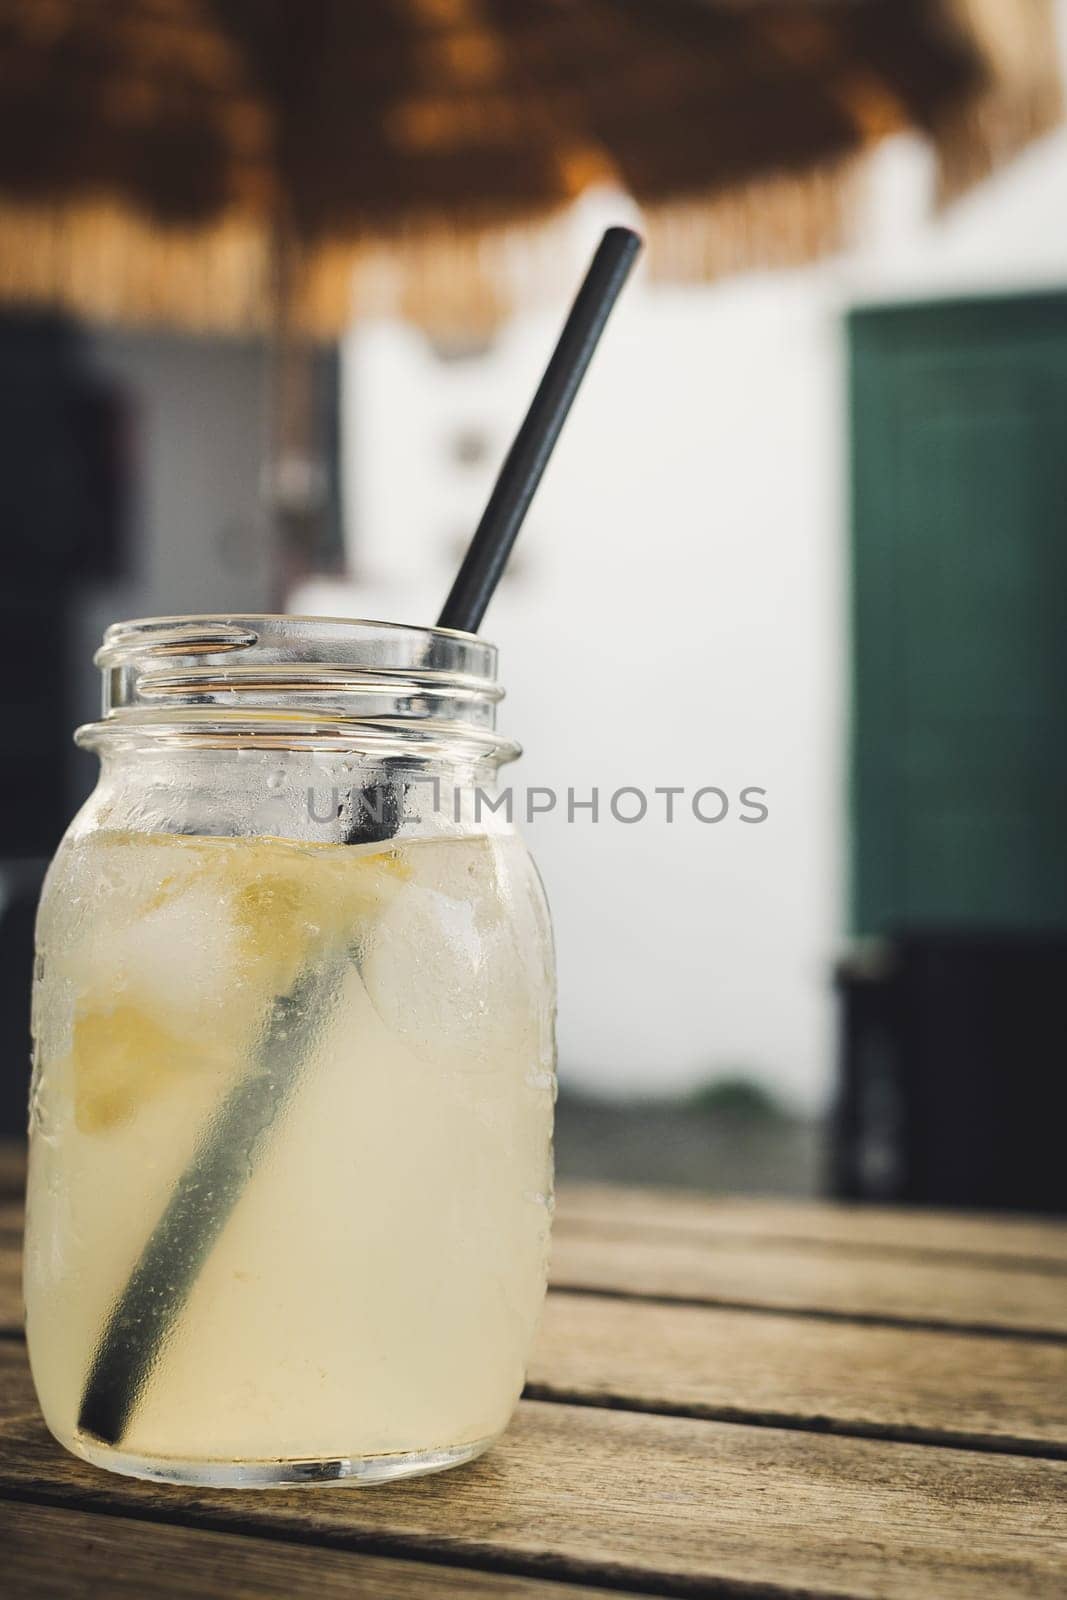 Vertical shot of a jar with homemade lemon lemonade by kb79